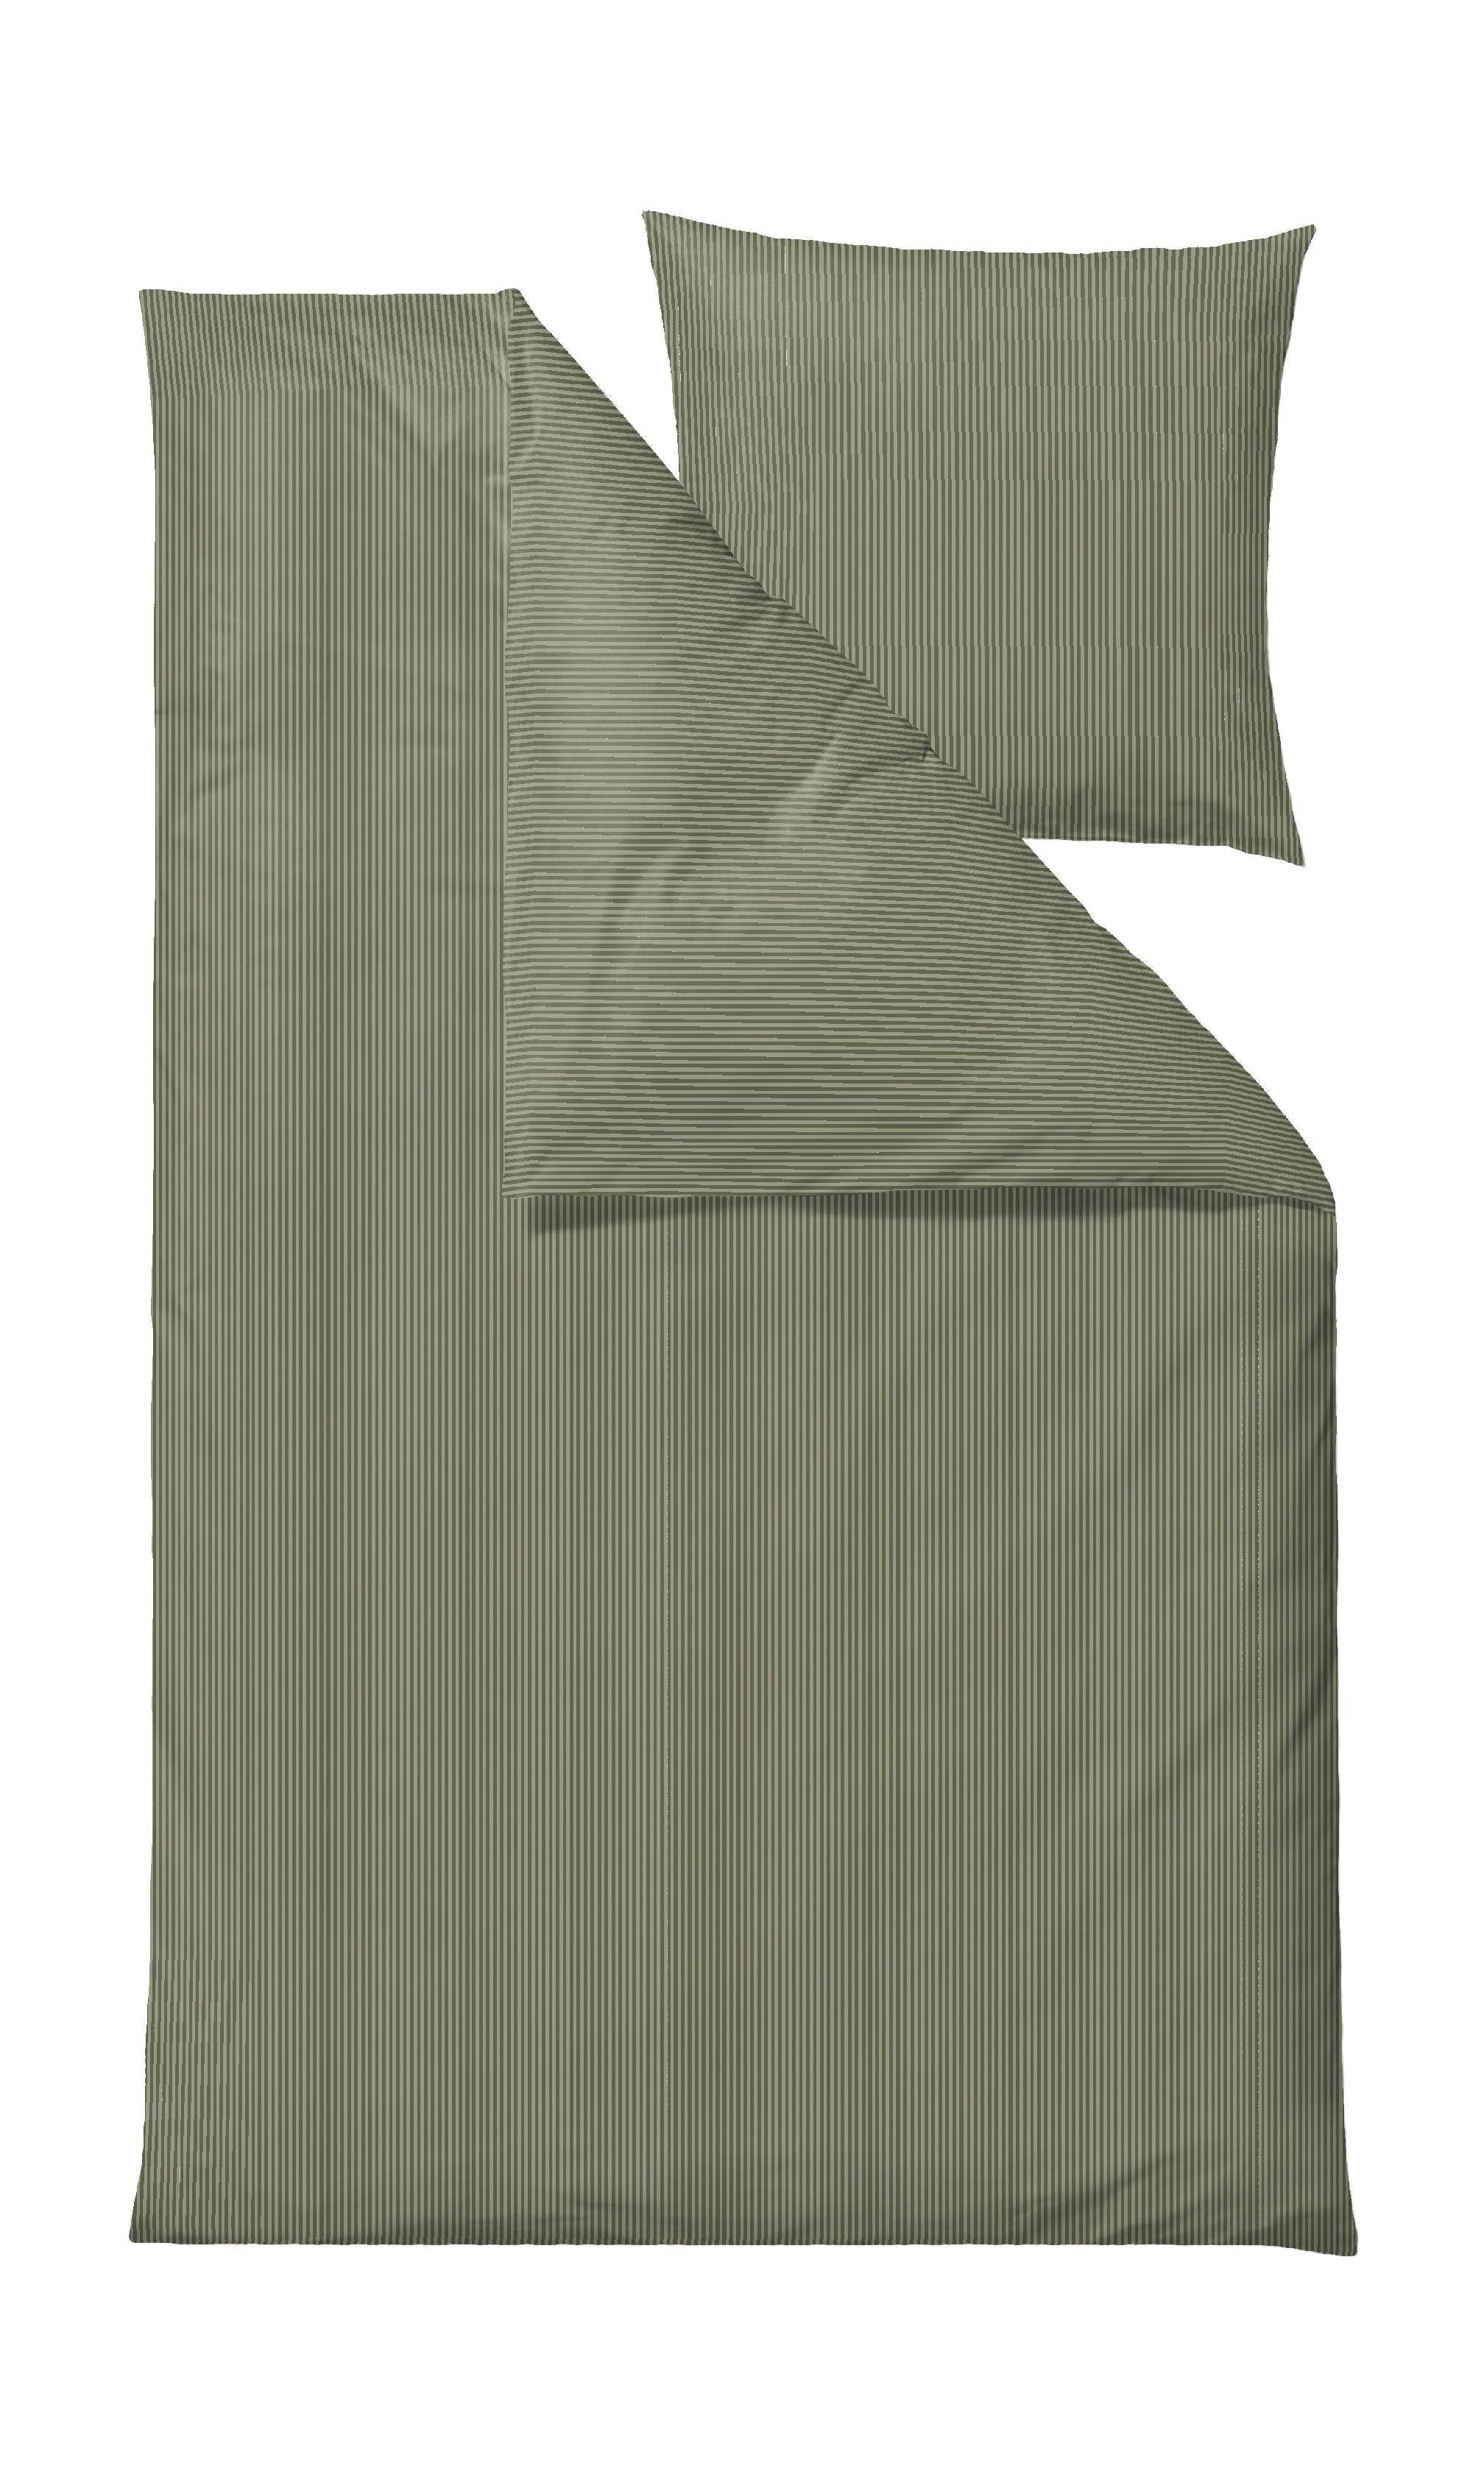 Södahl Classic Stripe Bed Linen 140x200 Cm, Olive